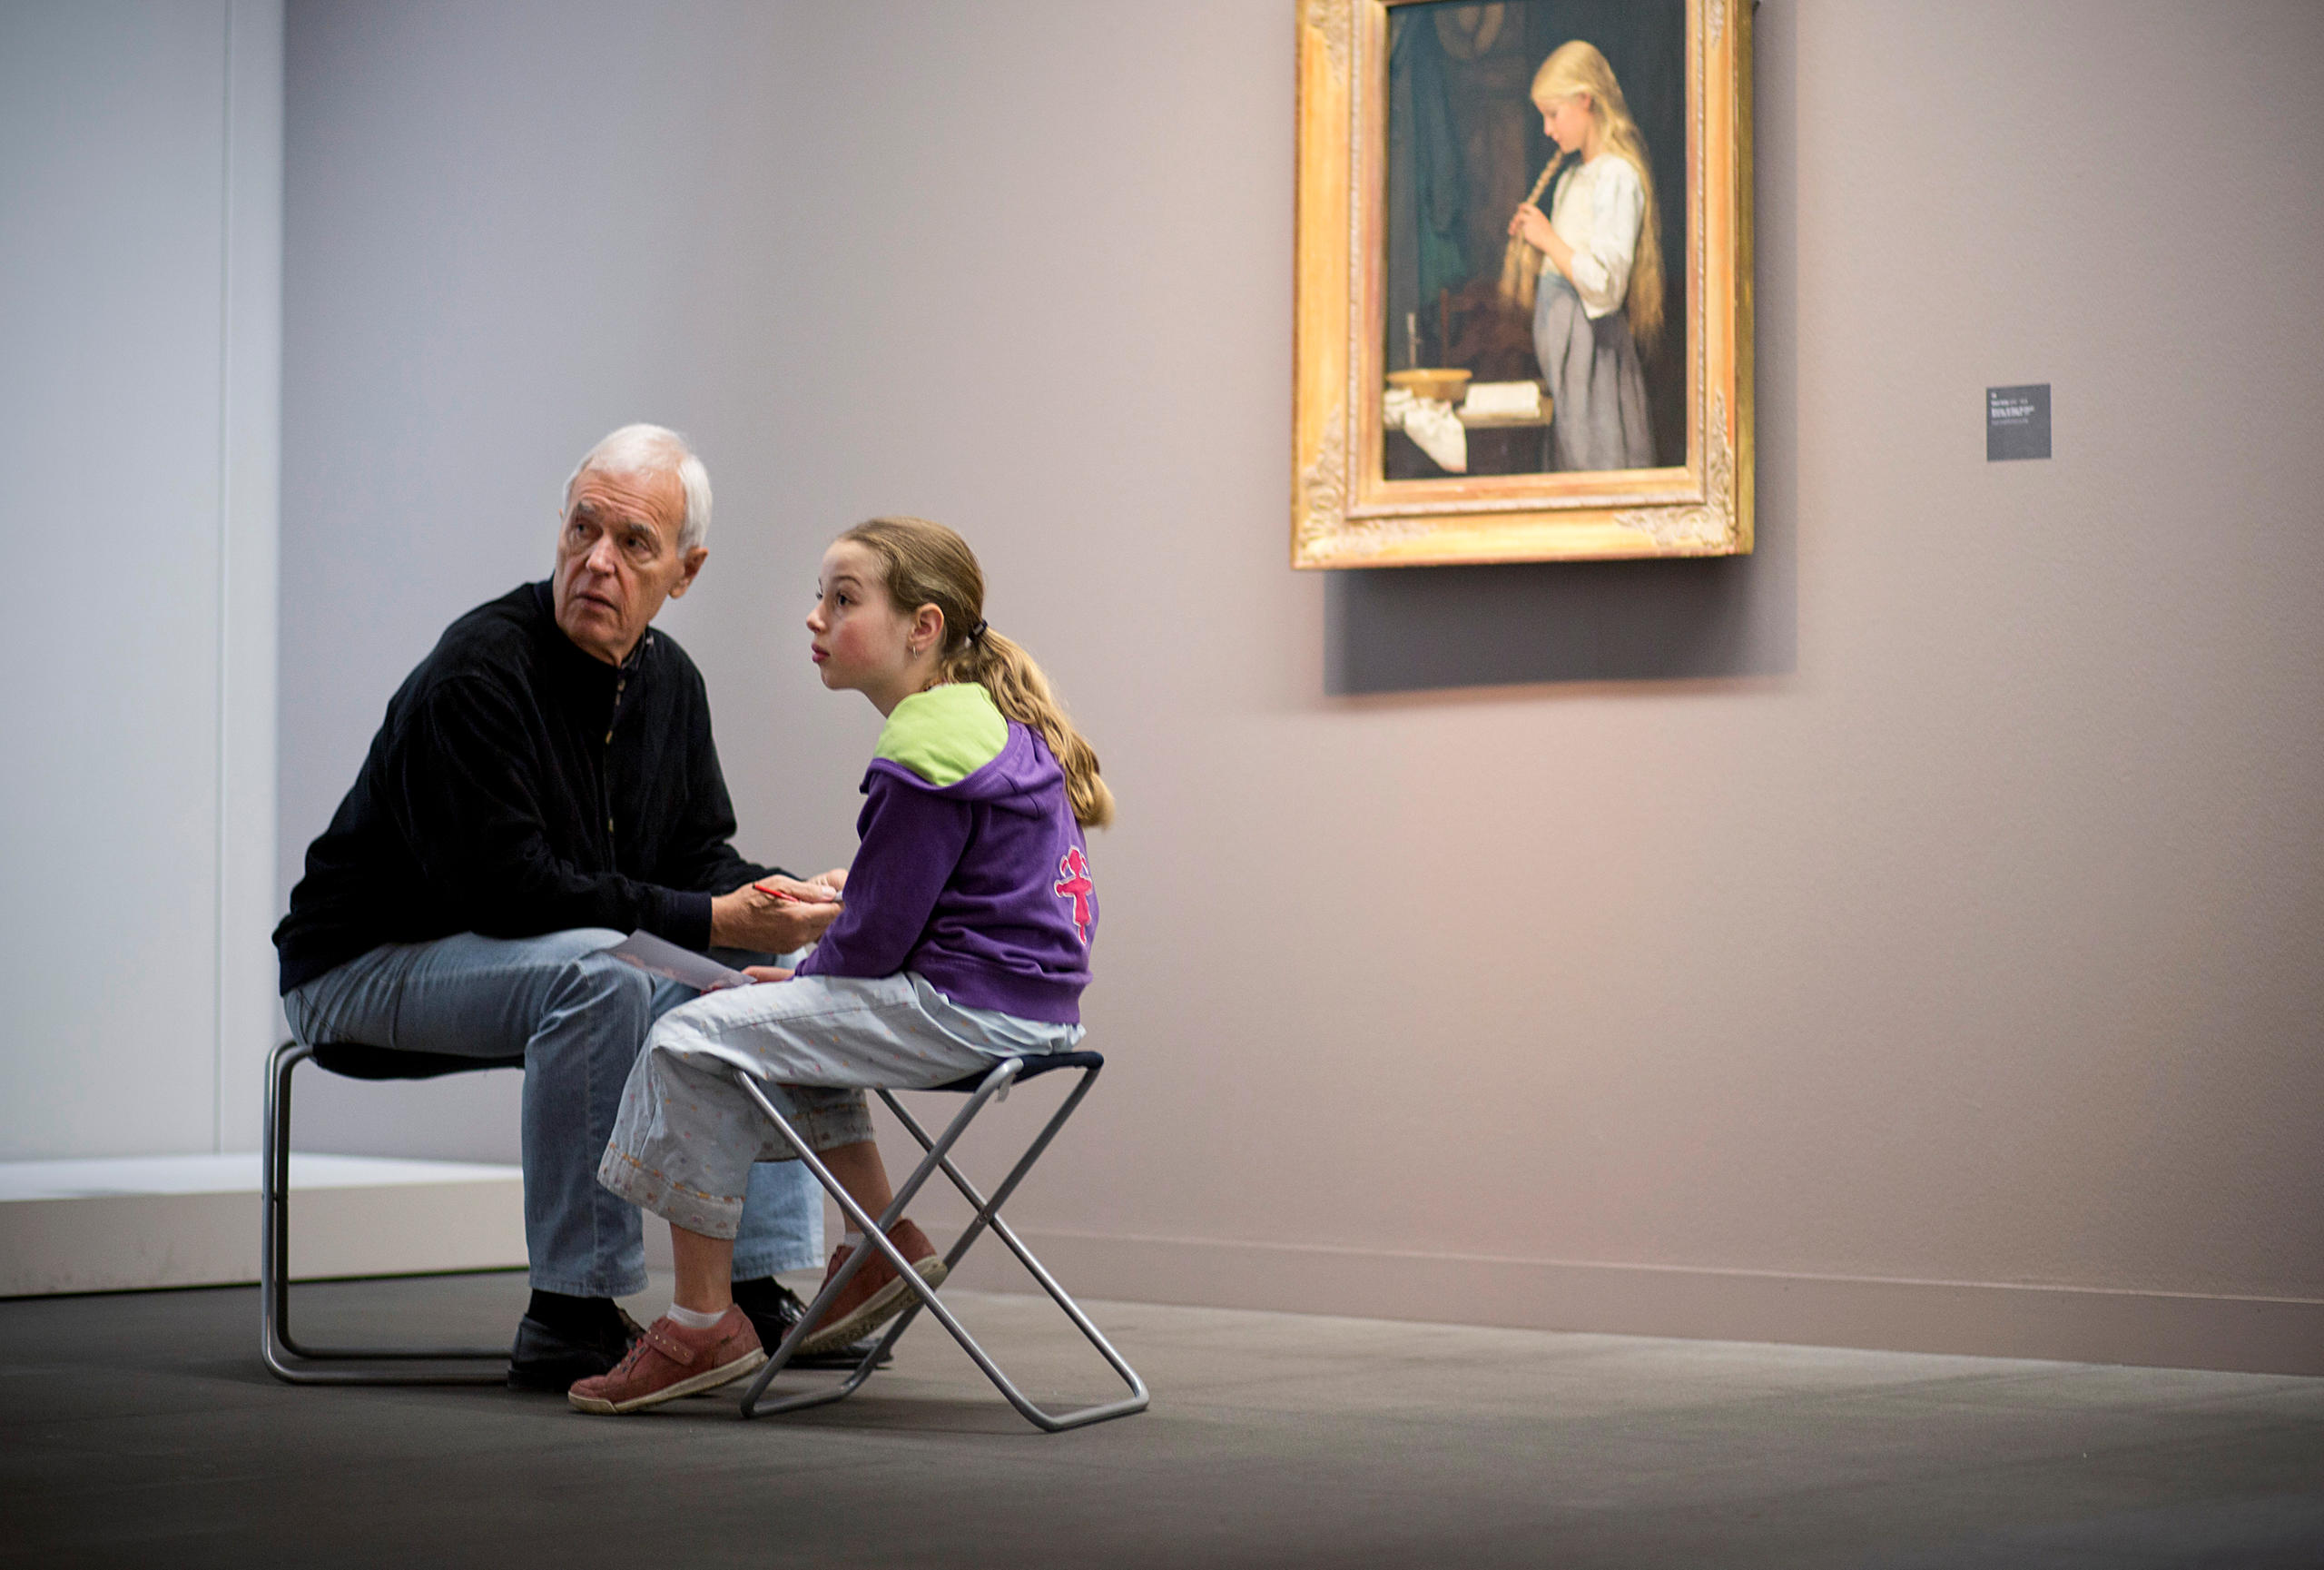 un uomo anziano con una bambina in un museo